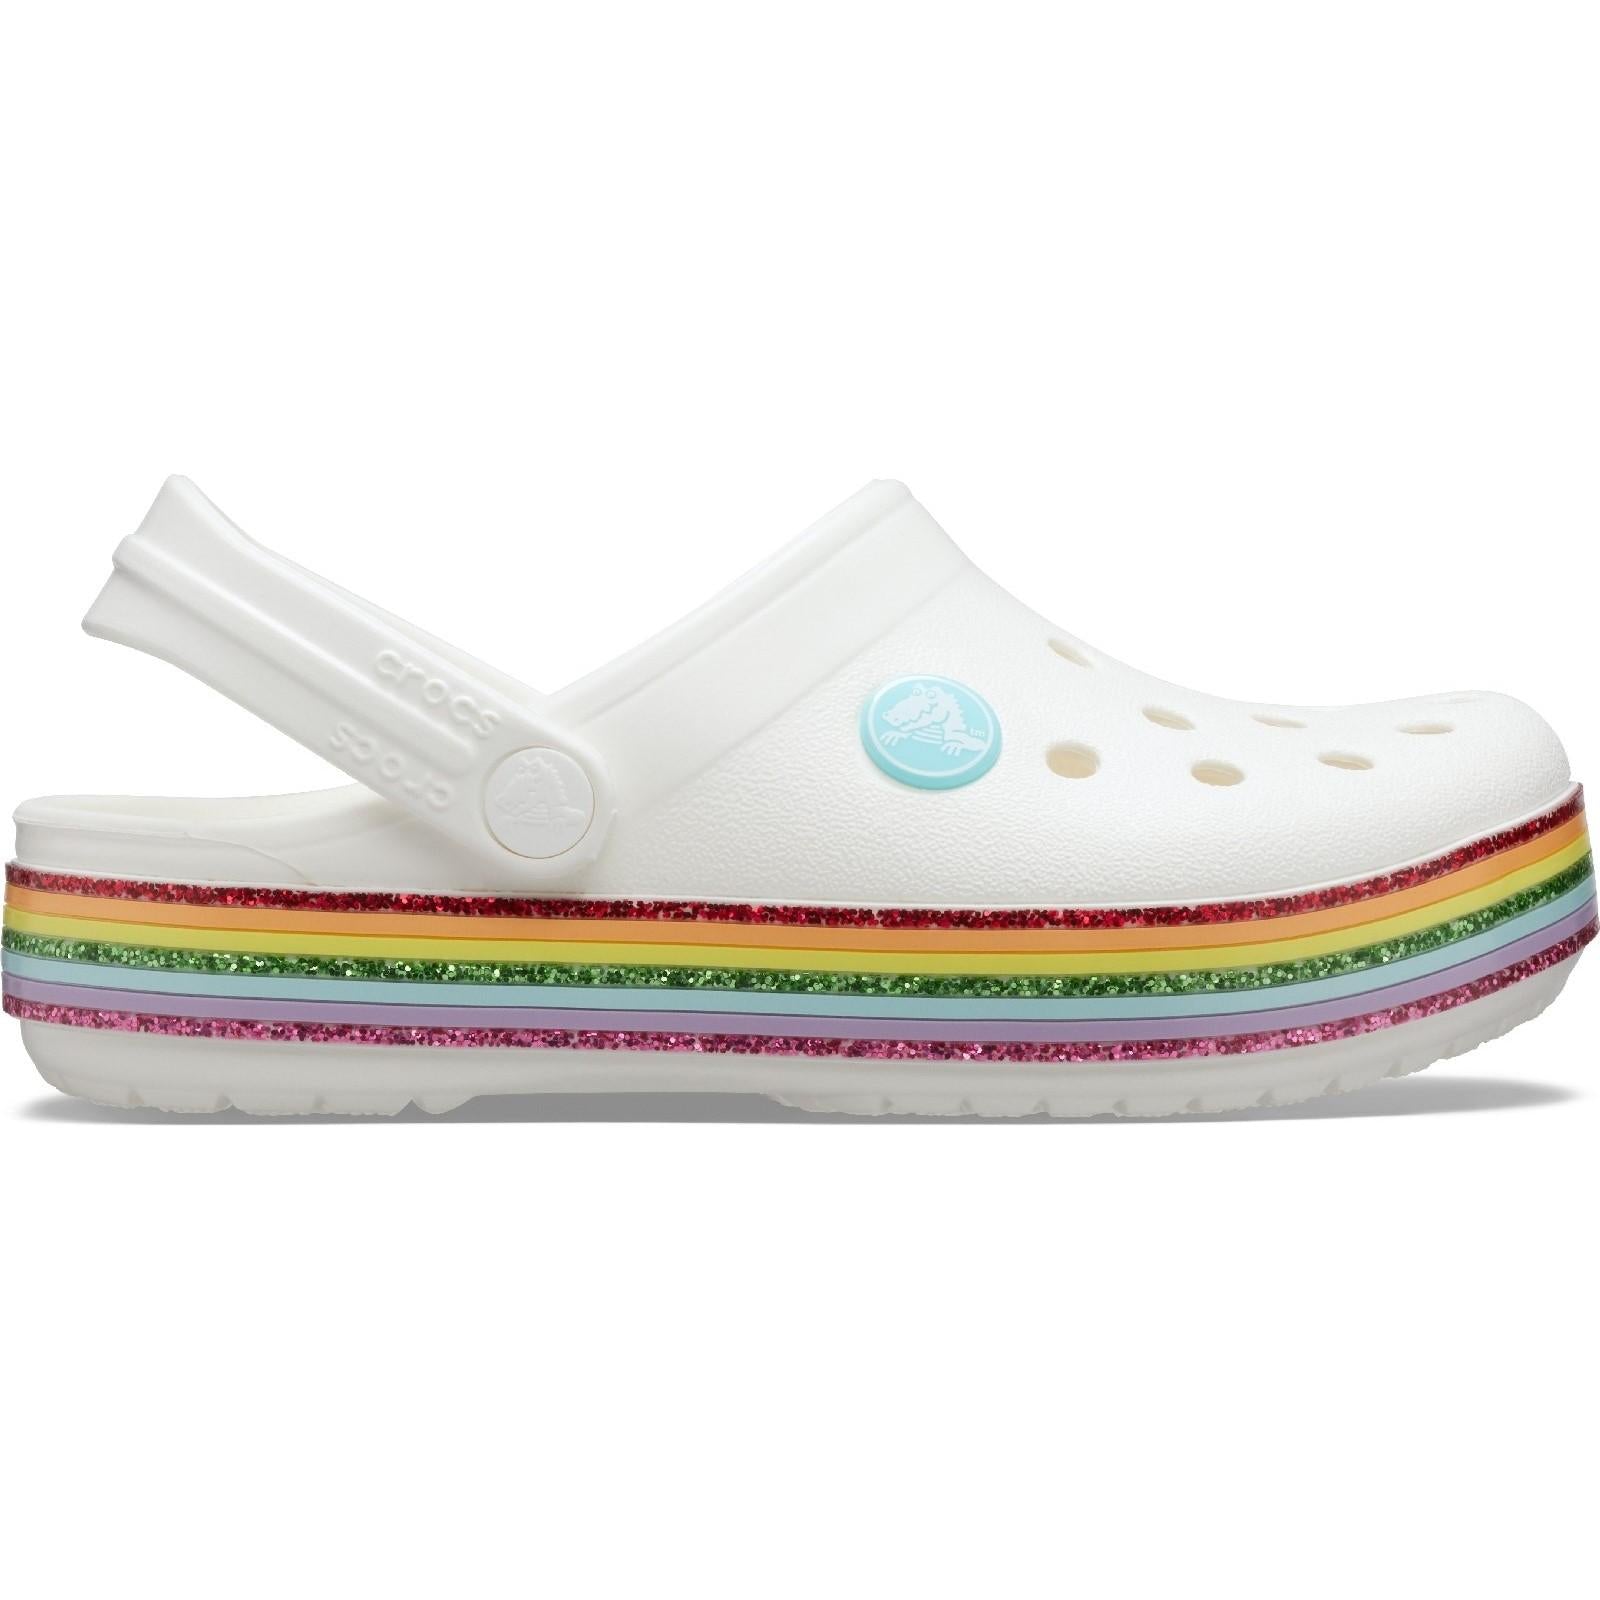 Crocs Rainbow Glitter Clog Sandals